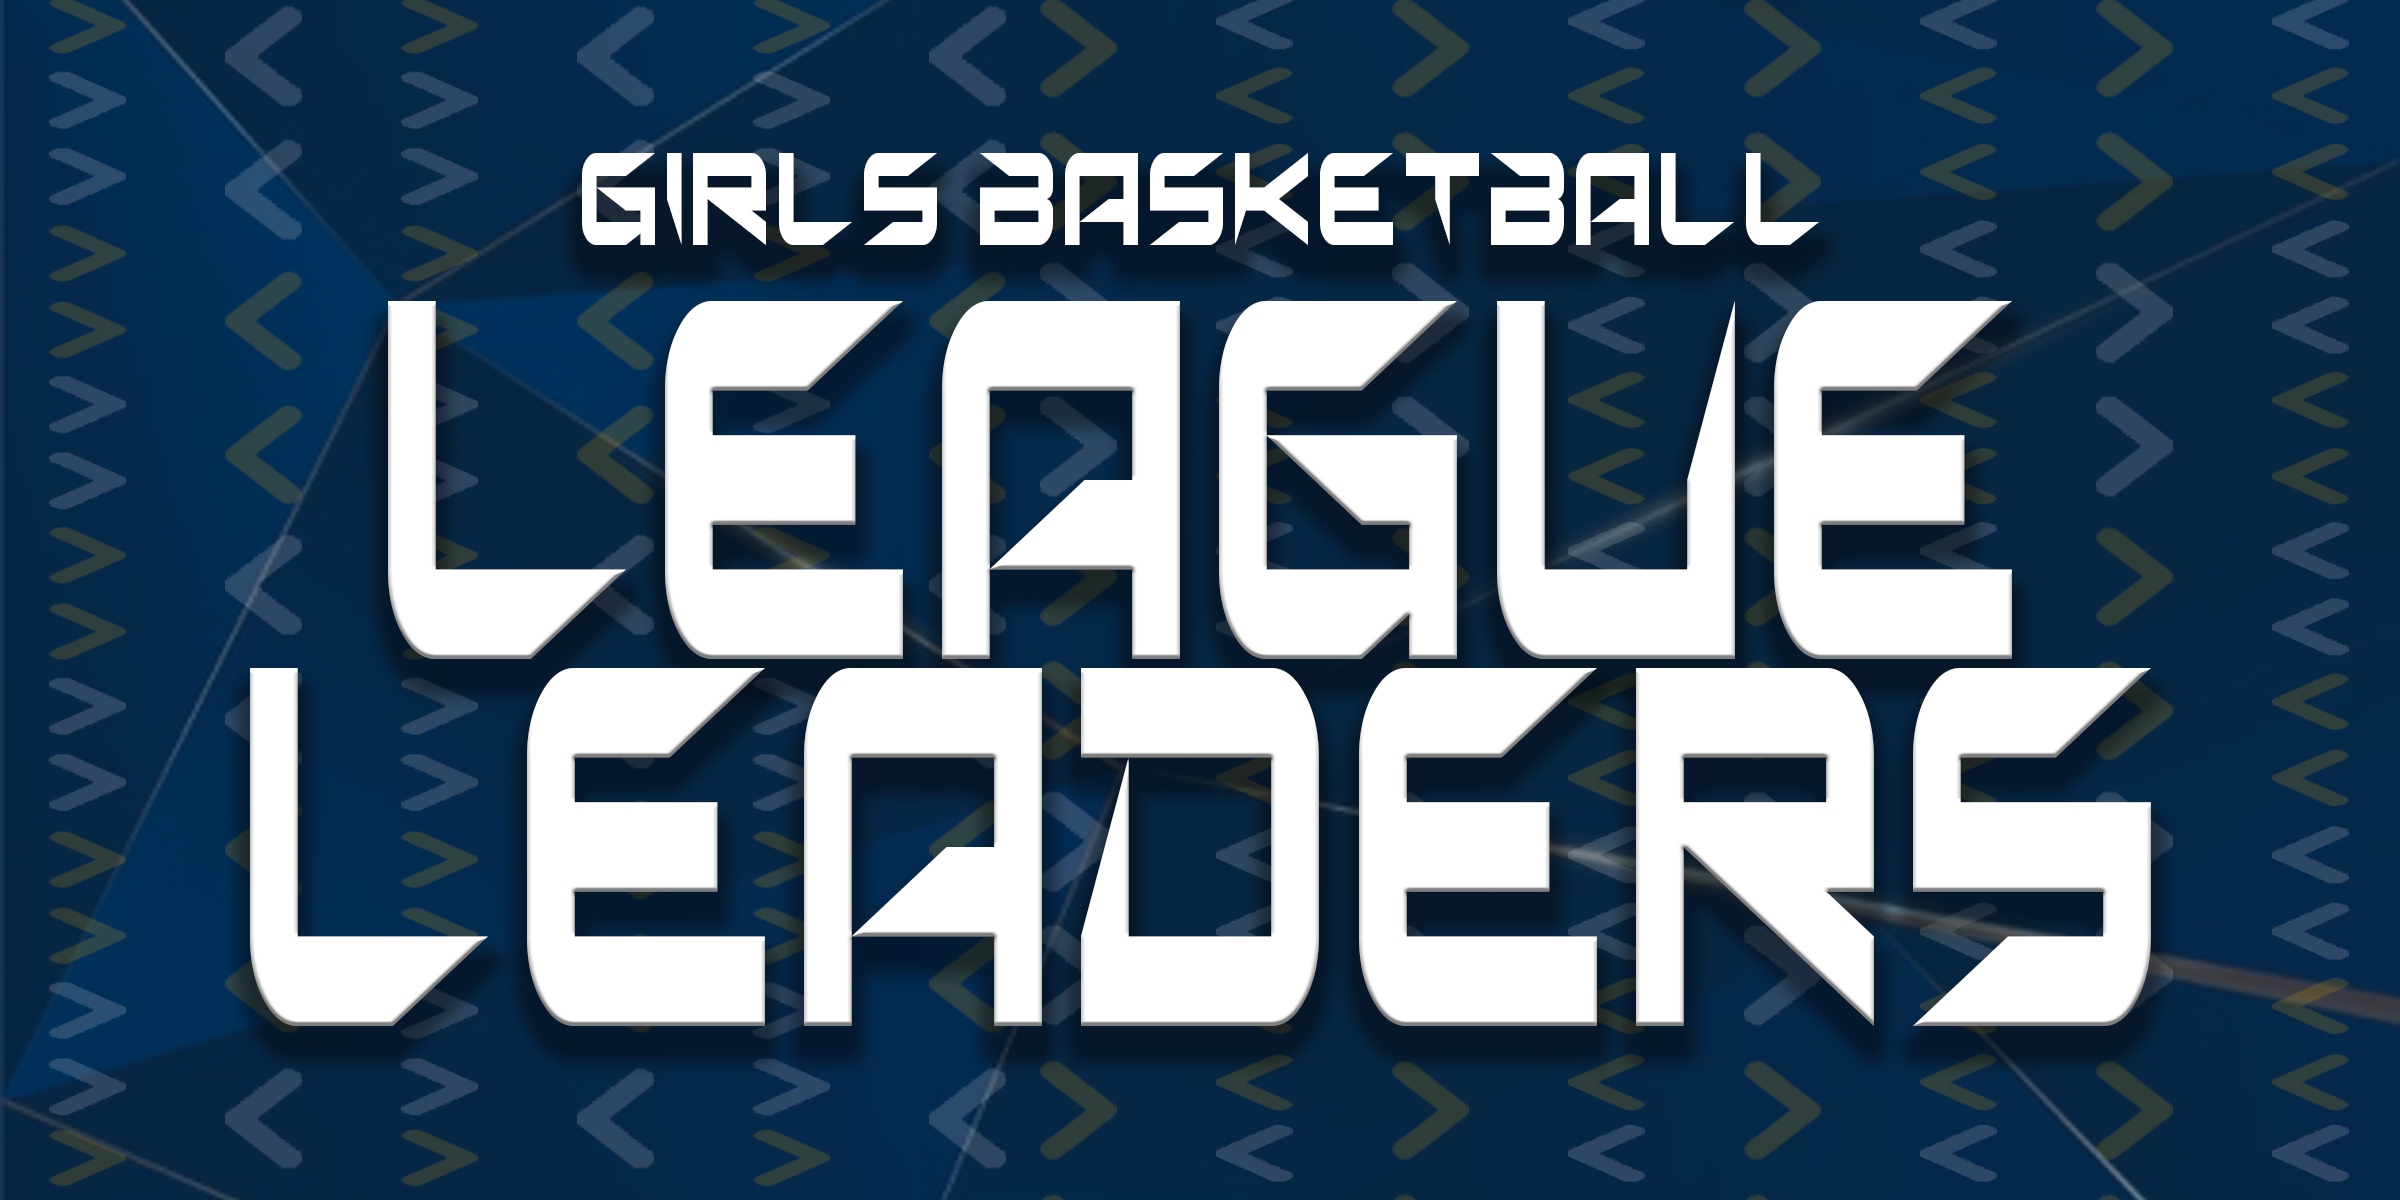 Hockomock Girls Basketball League Leaders